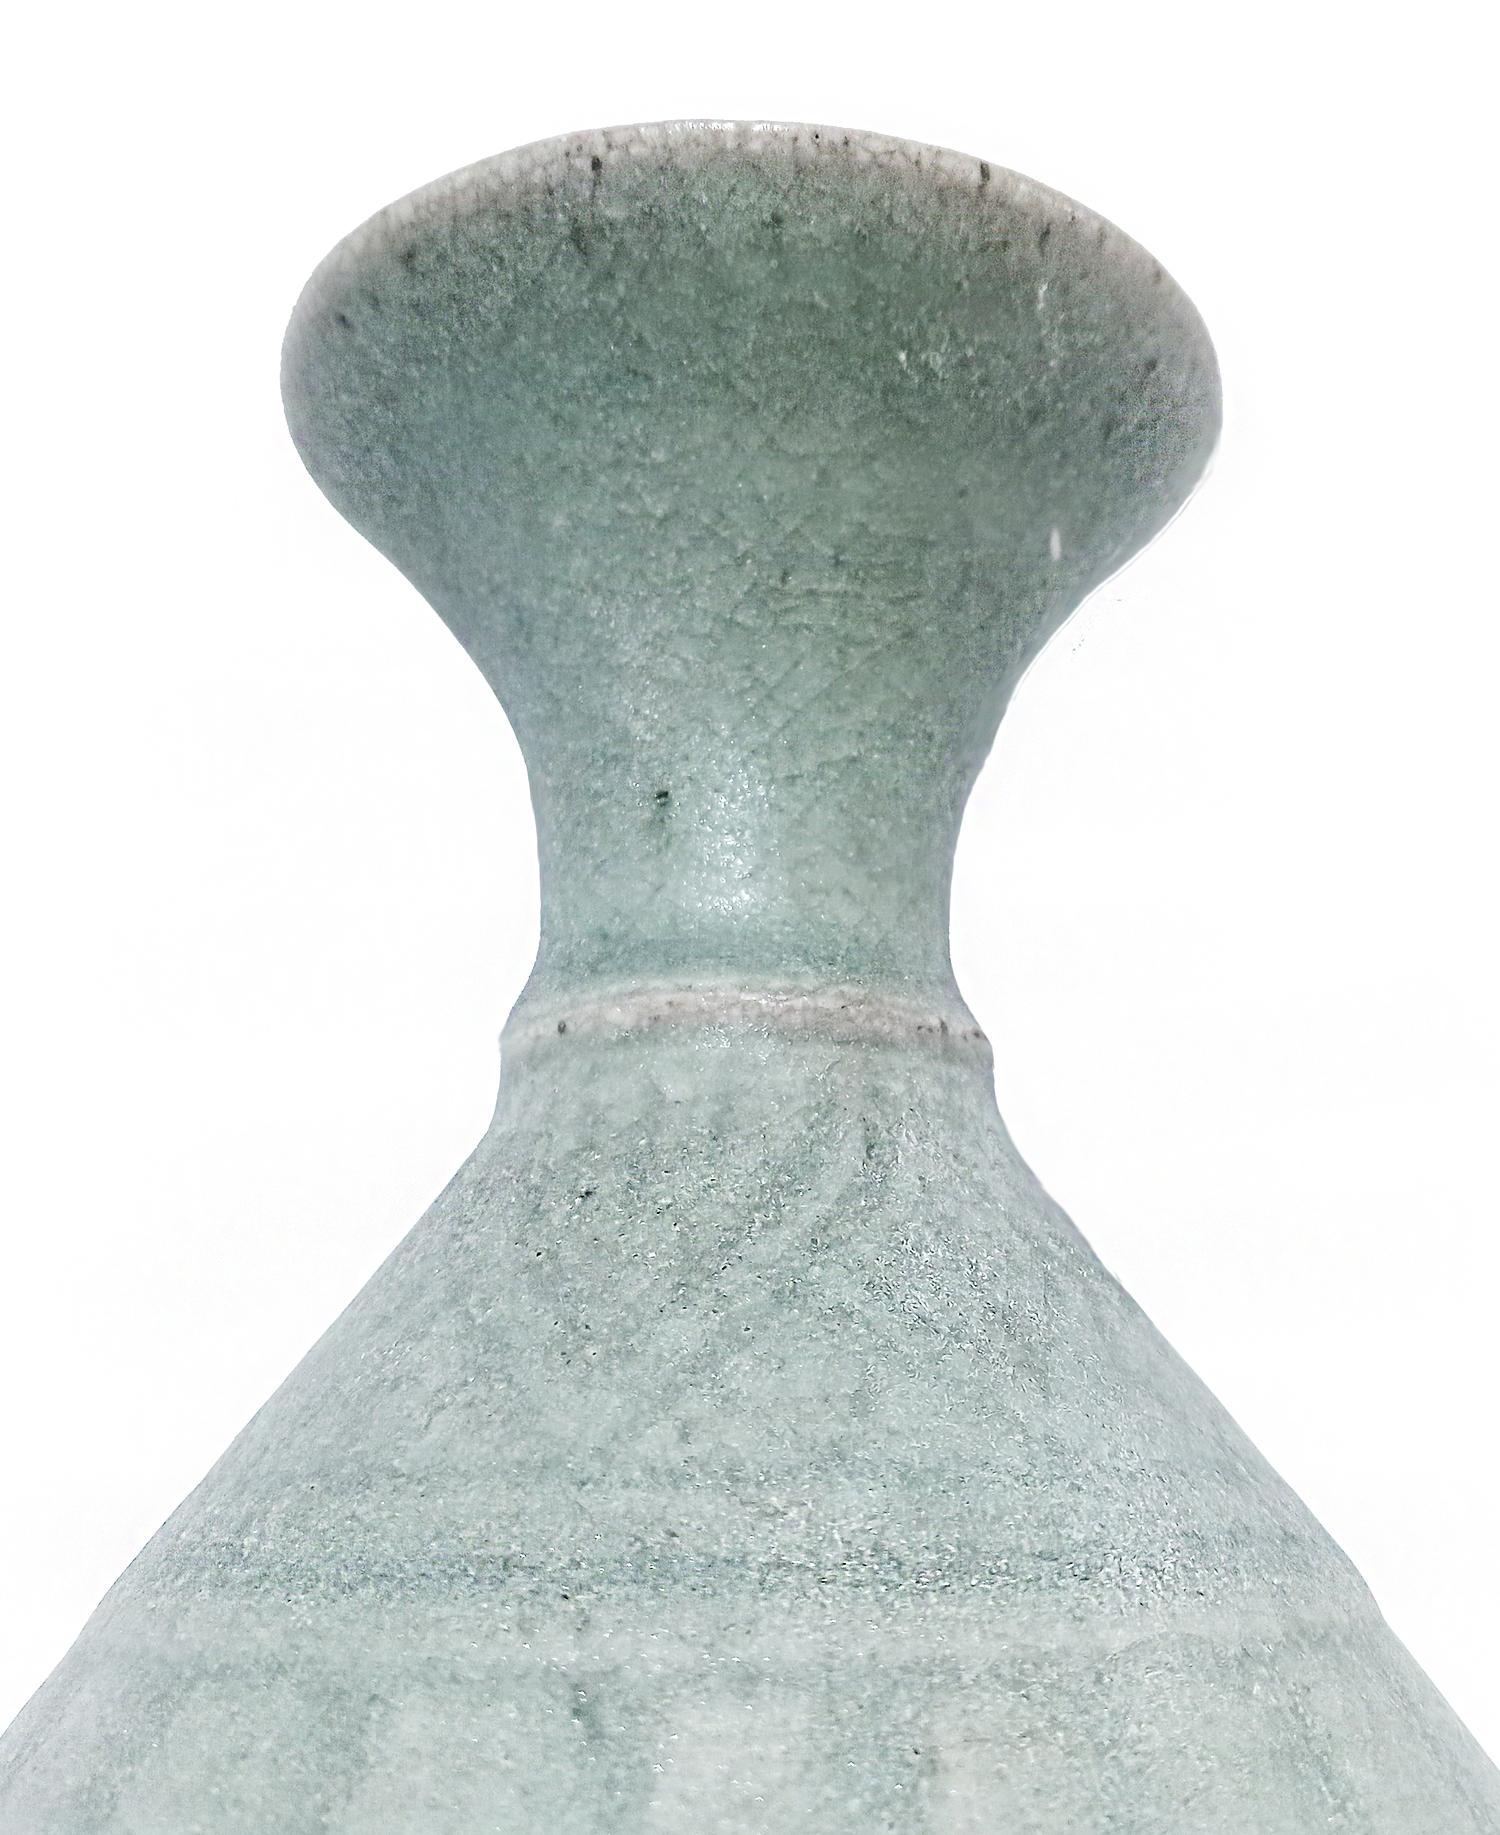 Thai Celadon Vase, Late 19th Century For Sale 1